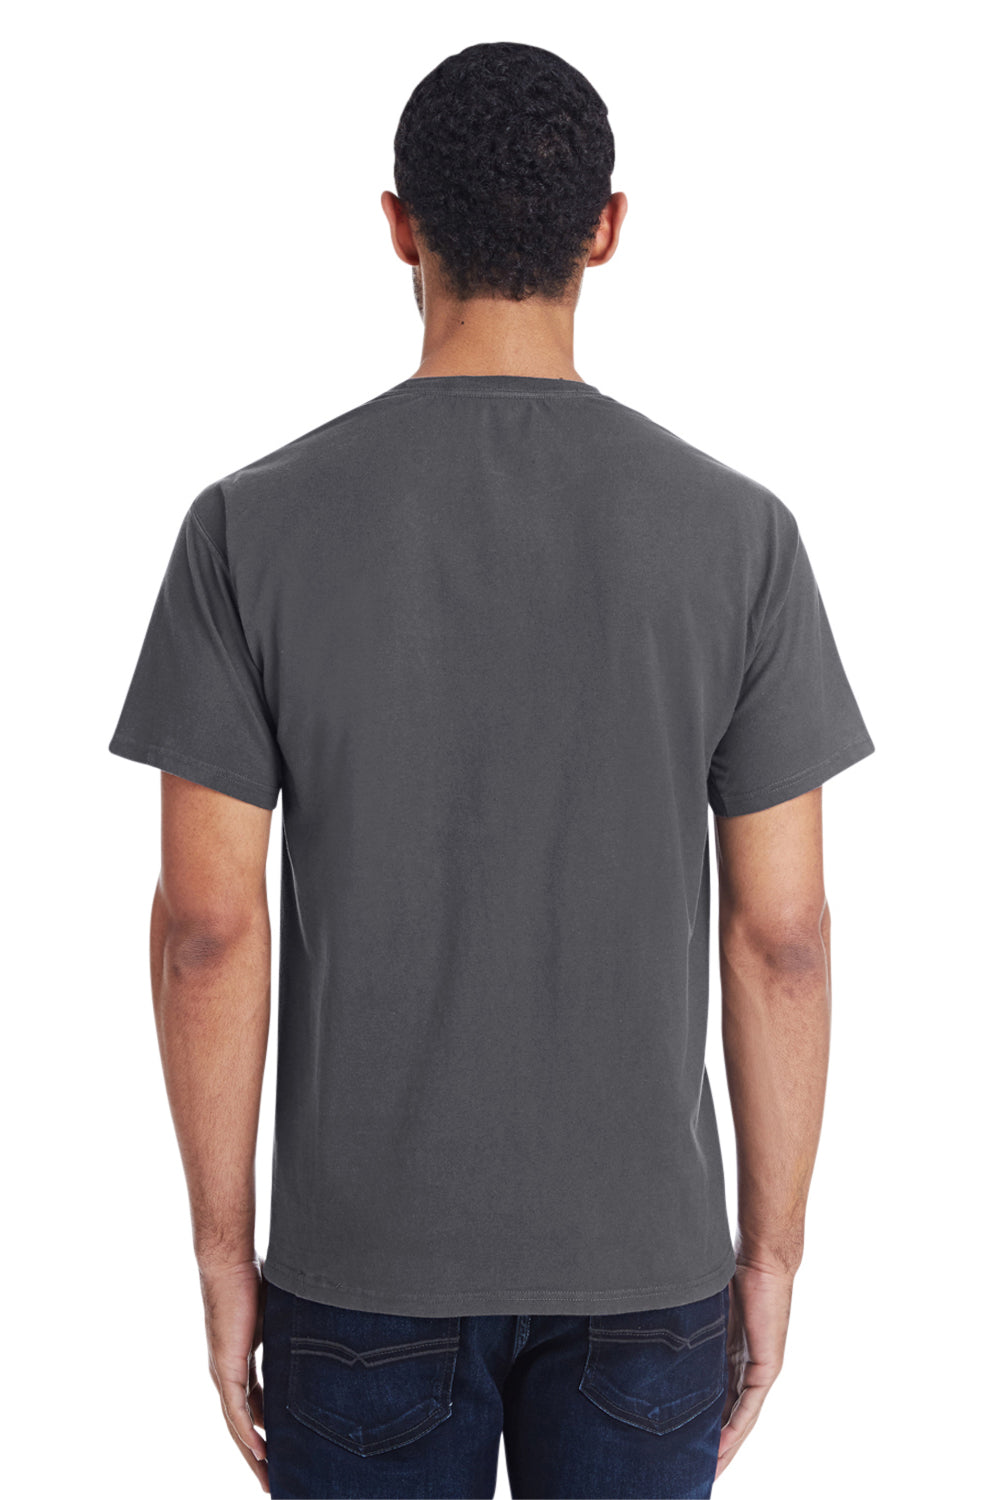 ComfortWash By Hanes GDH150 Mens Short Sleeve Crewneck T-Shirt w/ Pocket Railroad Grey Back